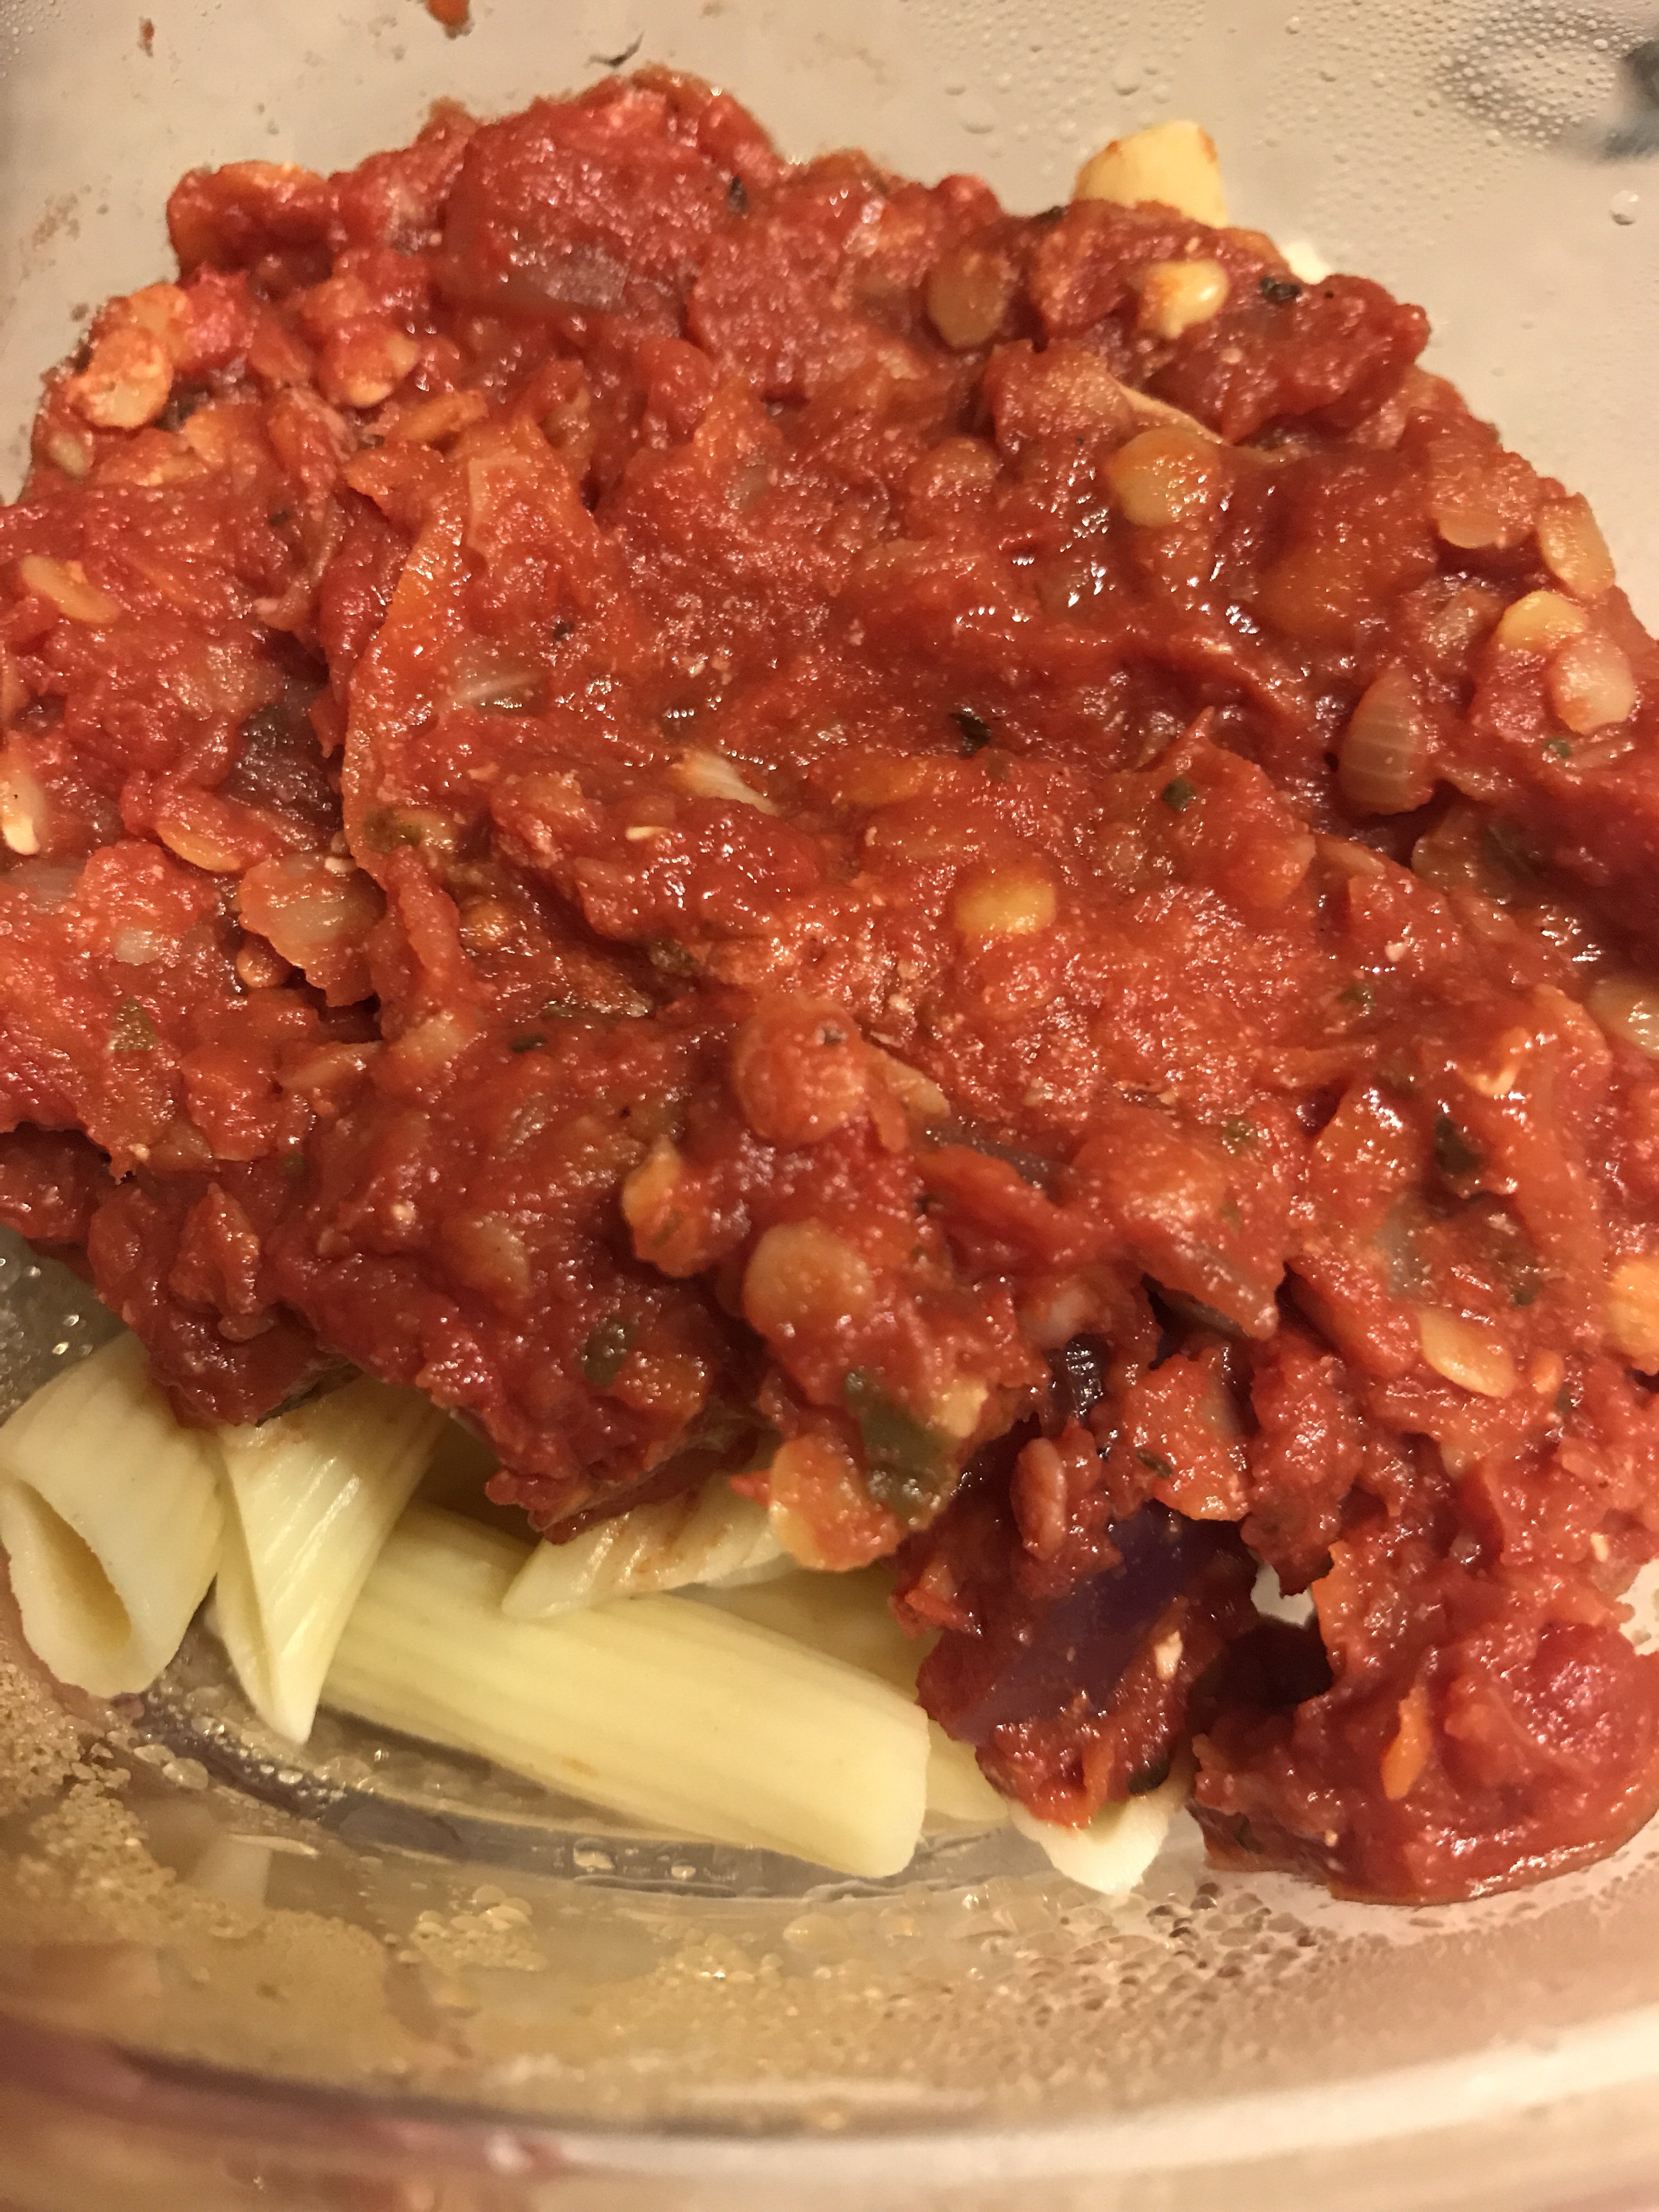 Penne pasta with lentil bolognese sauce